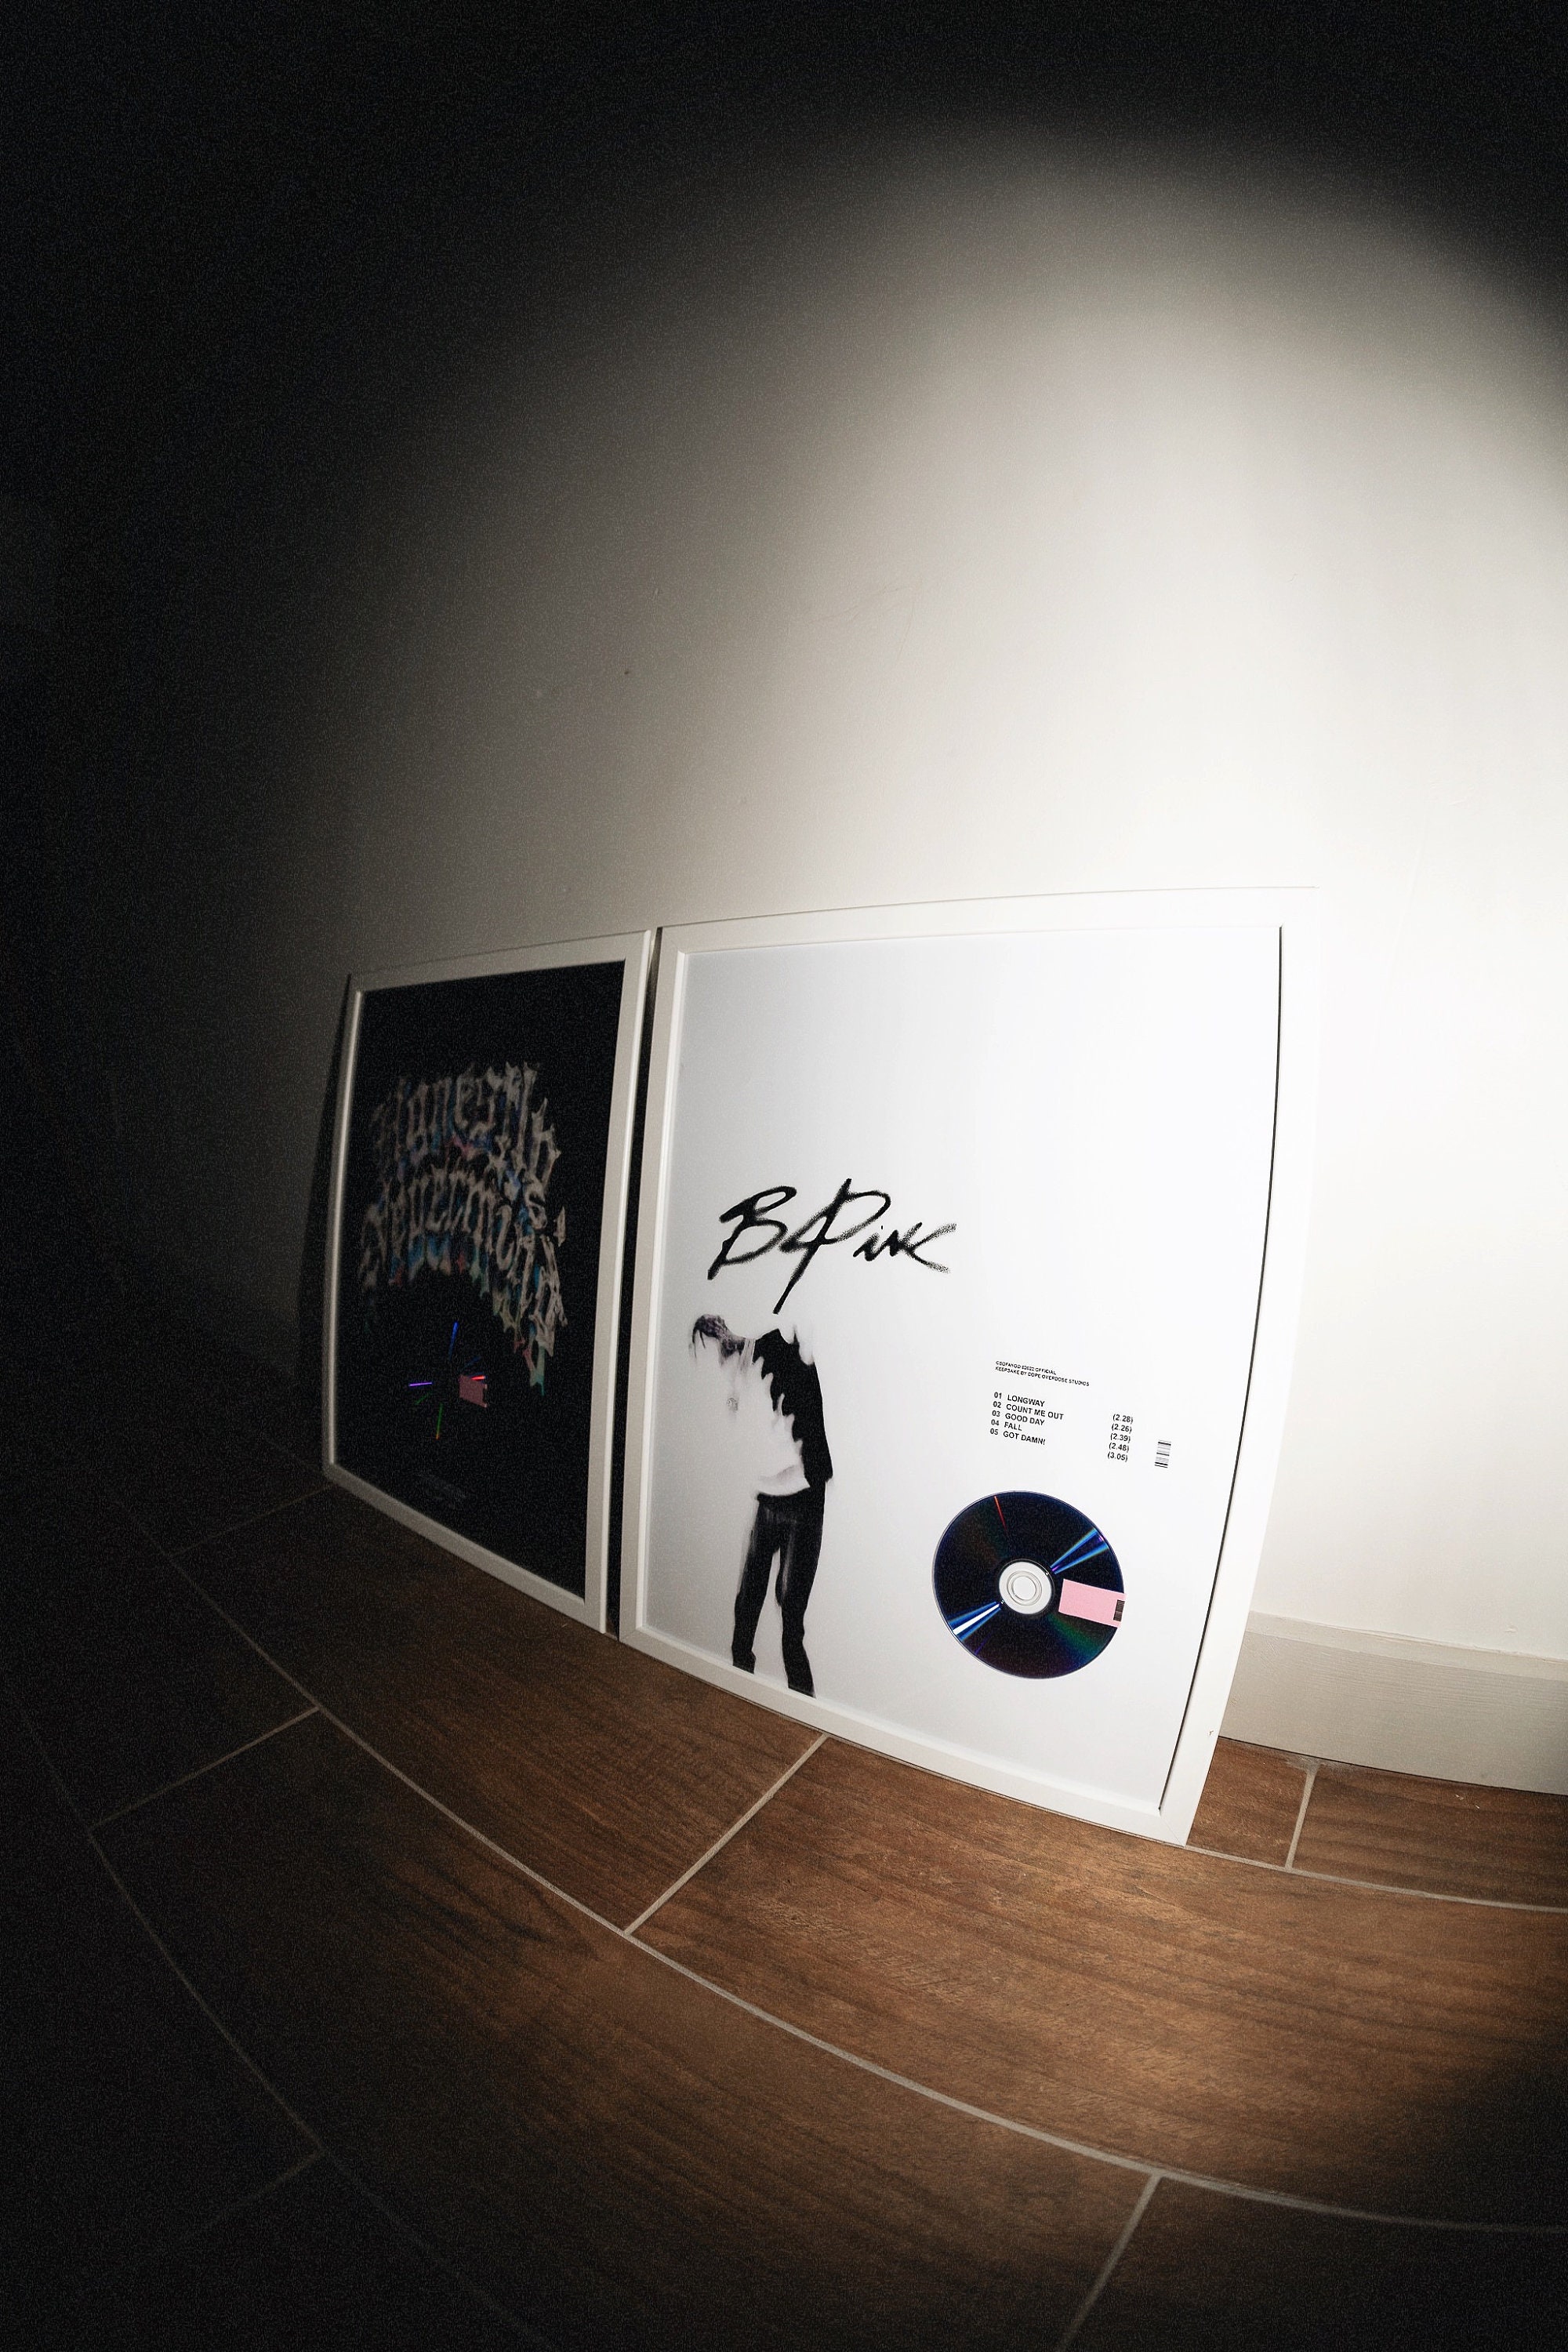 V-layover Poster Album, Wall Album Poster, Kpop, Bts, Custom Album Cover,  Music Poster, Album Poster, Album, Album Art, Digital Product 